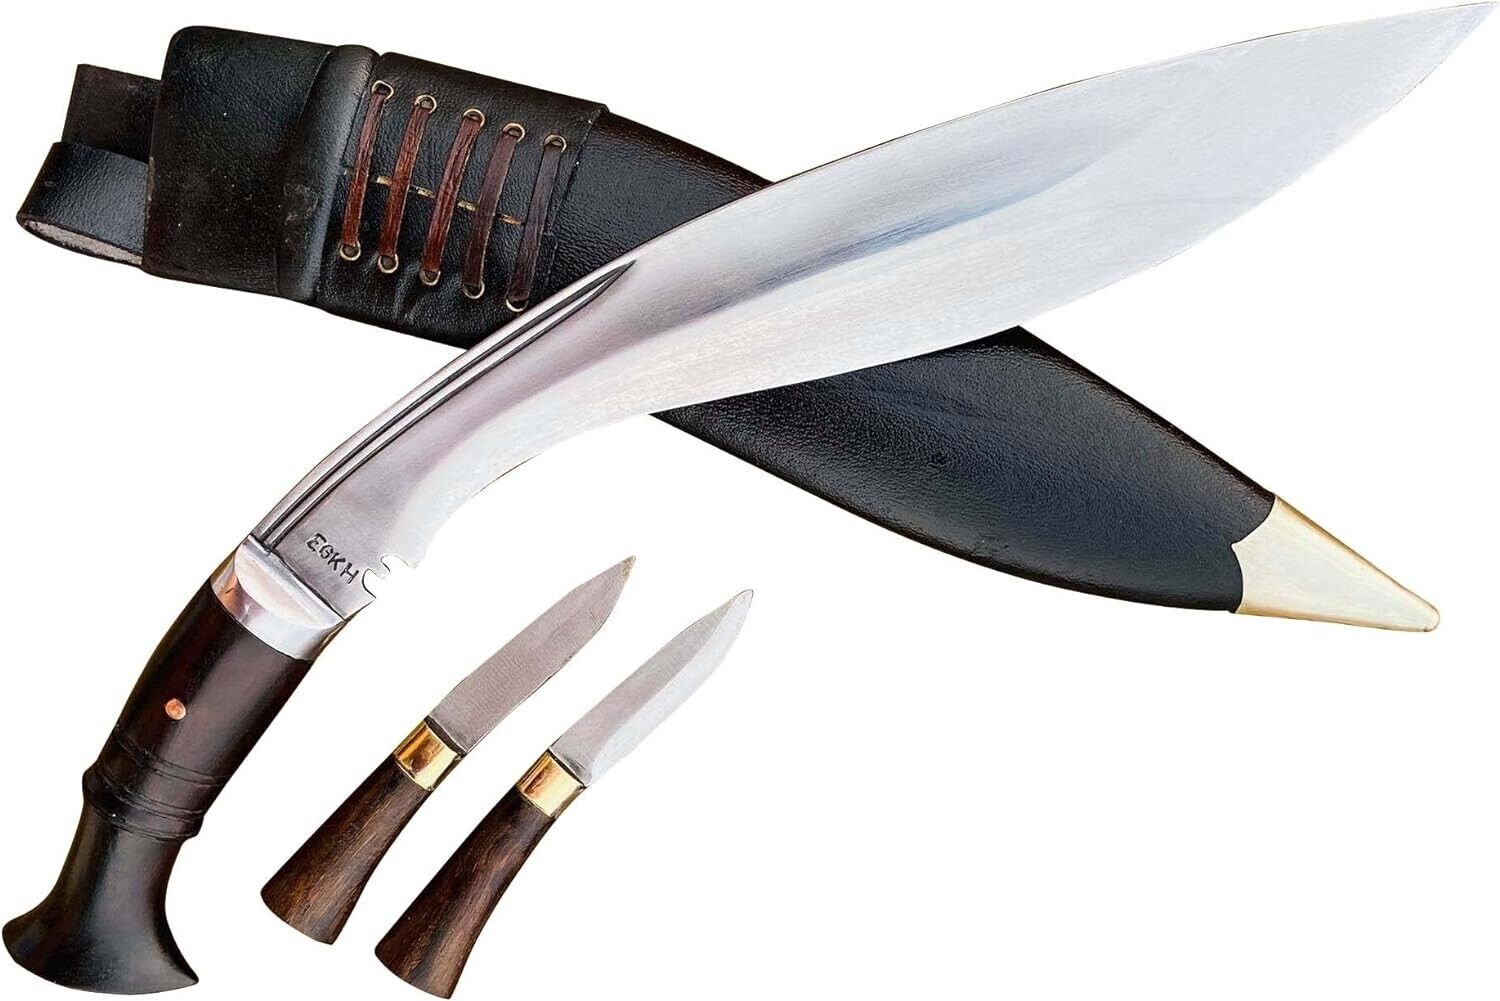 SALE 50% OFF Kukri, 12” Gurkha Khukuri - High Carbon Steel Hand Forged Knife